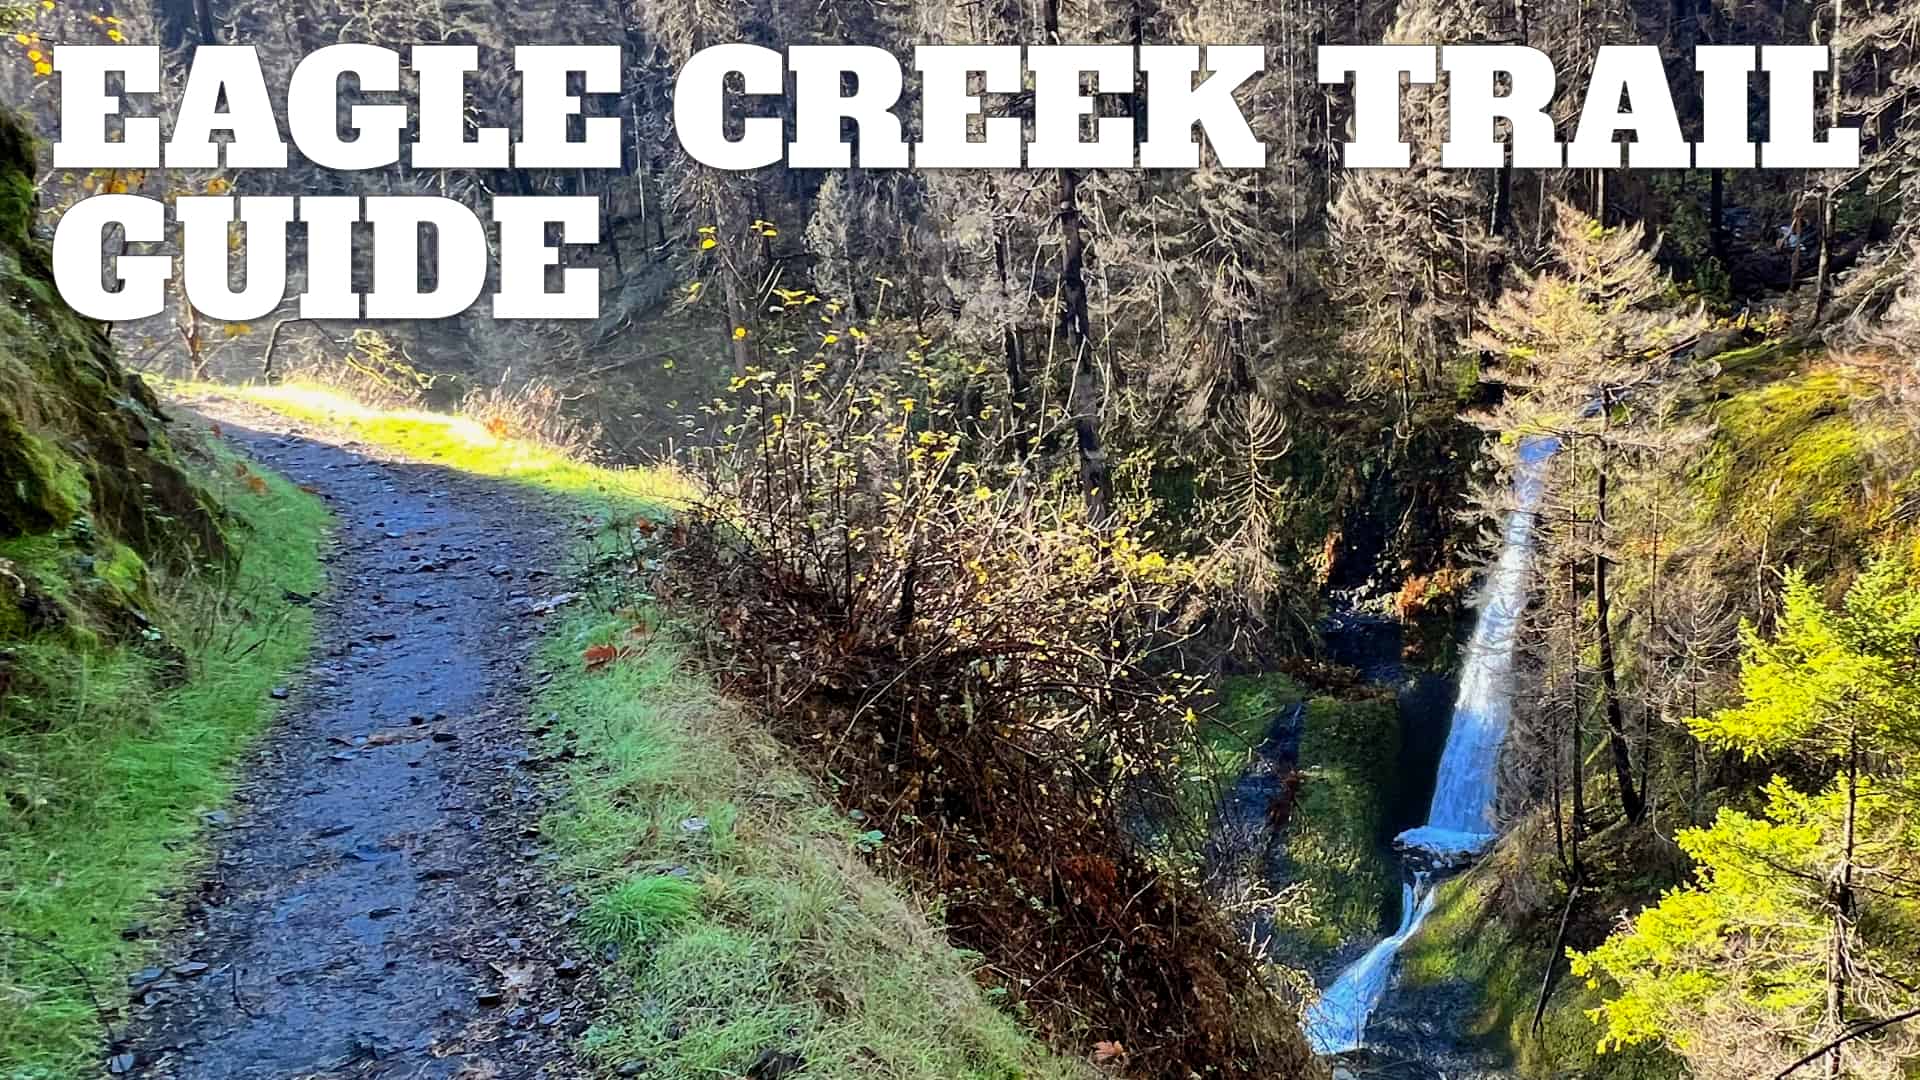 zo Array partij Eagle Creek Trail Guide - HikingGuy.com